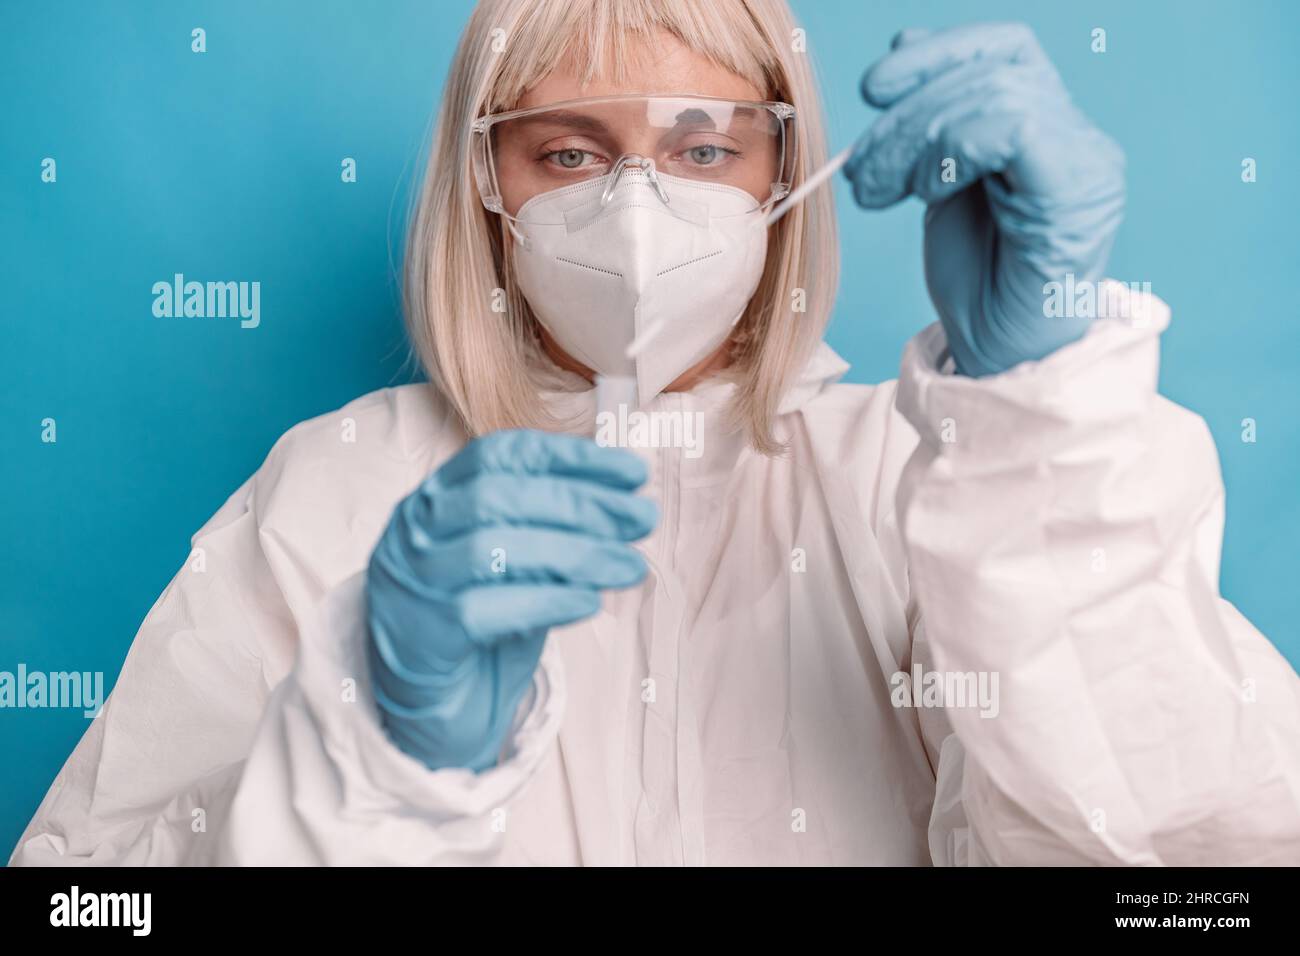 Coronavirus pcr test. Doctor in protective suit medical mask gloves holding Swab saliva sample for diagnostic covid 19 coronavirus virus on blue backg Stock Photo